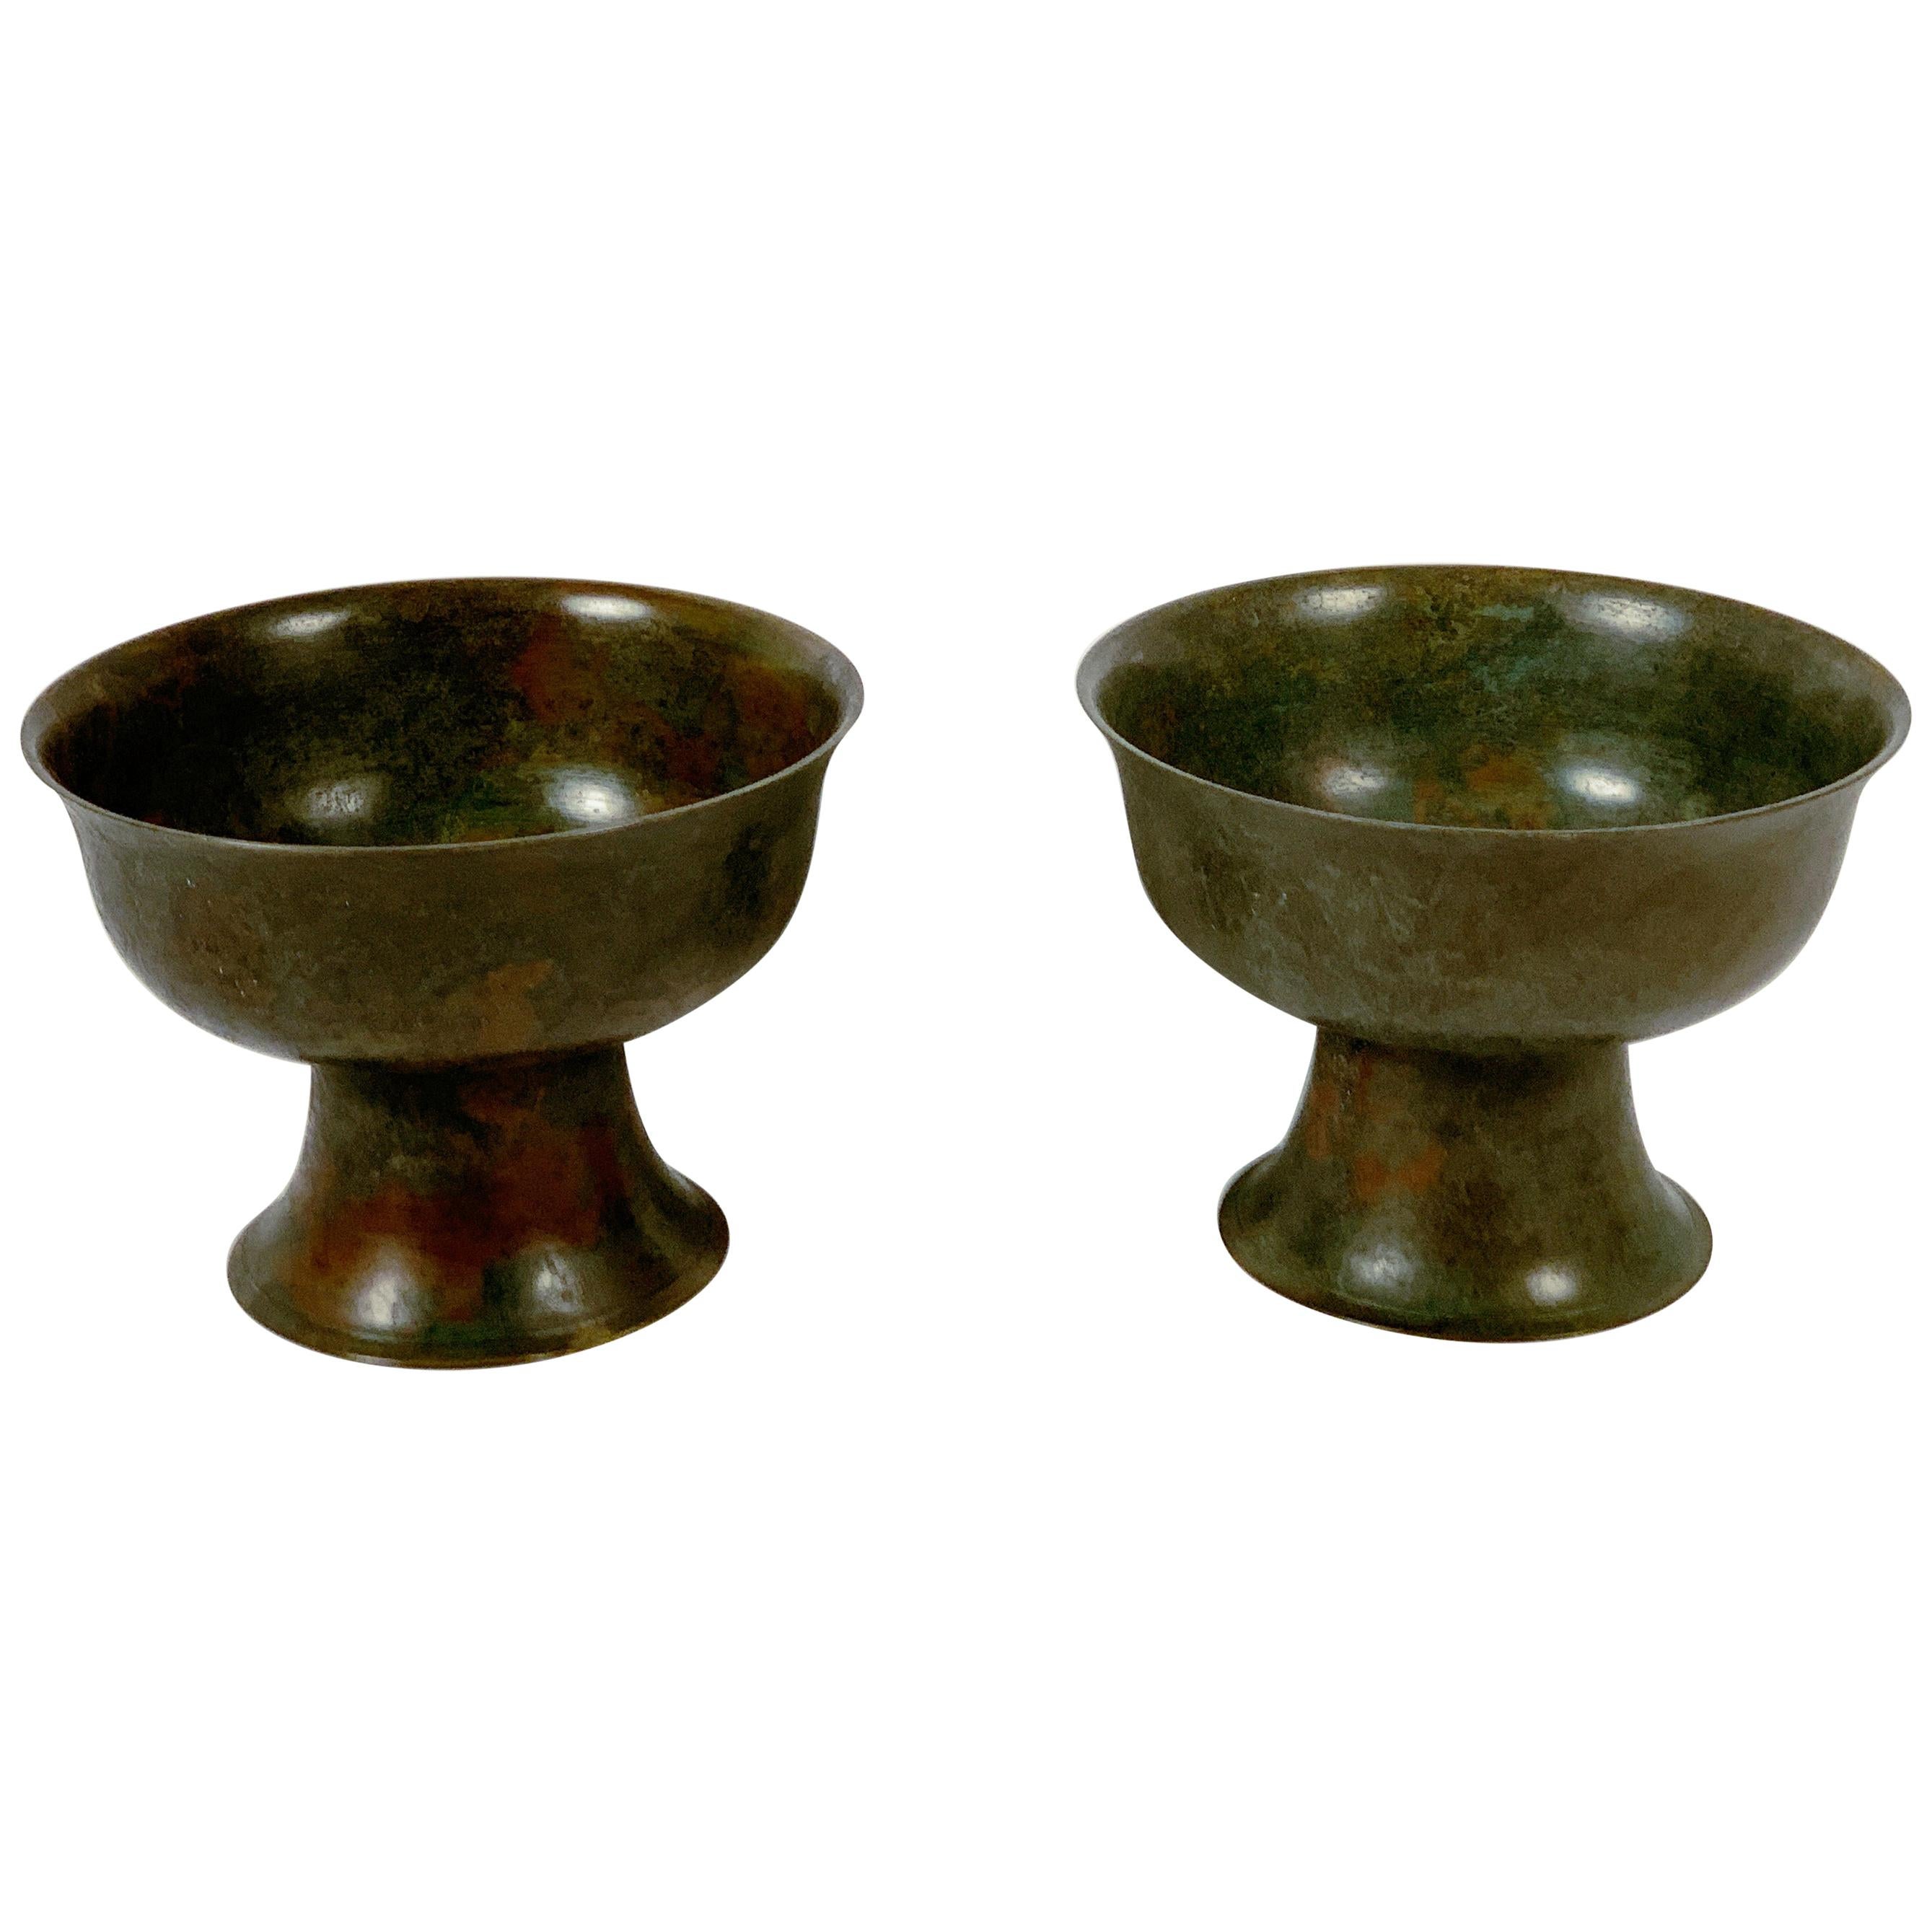 Pair of Korean Goryeo Dynasty Bronze Pedestal Bowls, 13th-15th Century, Korea